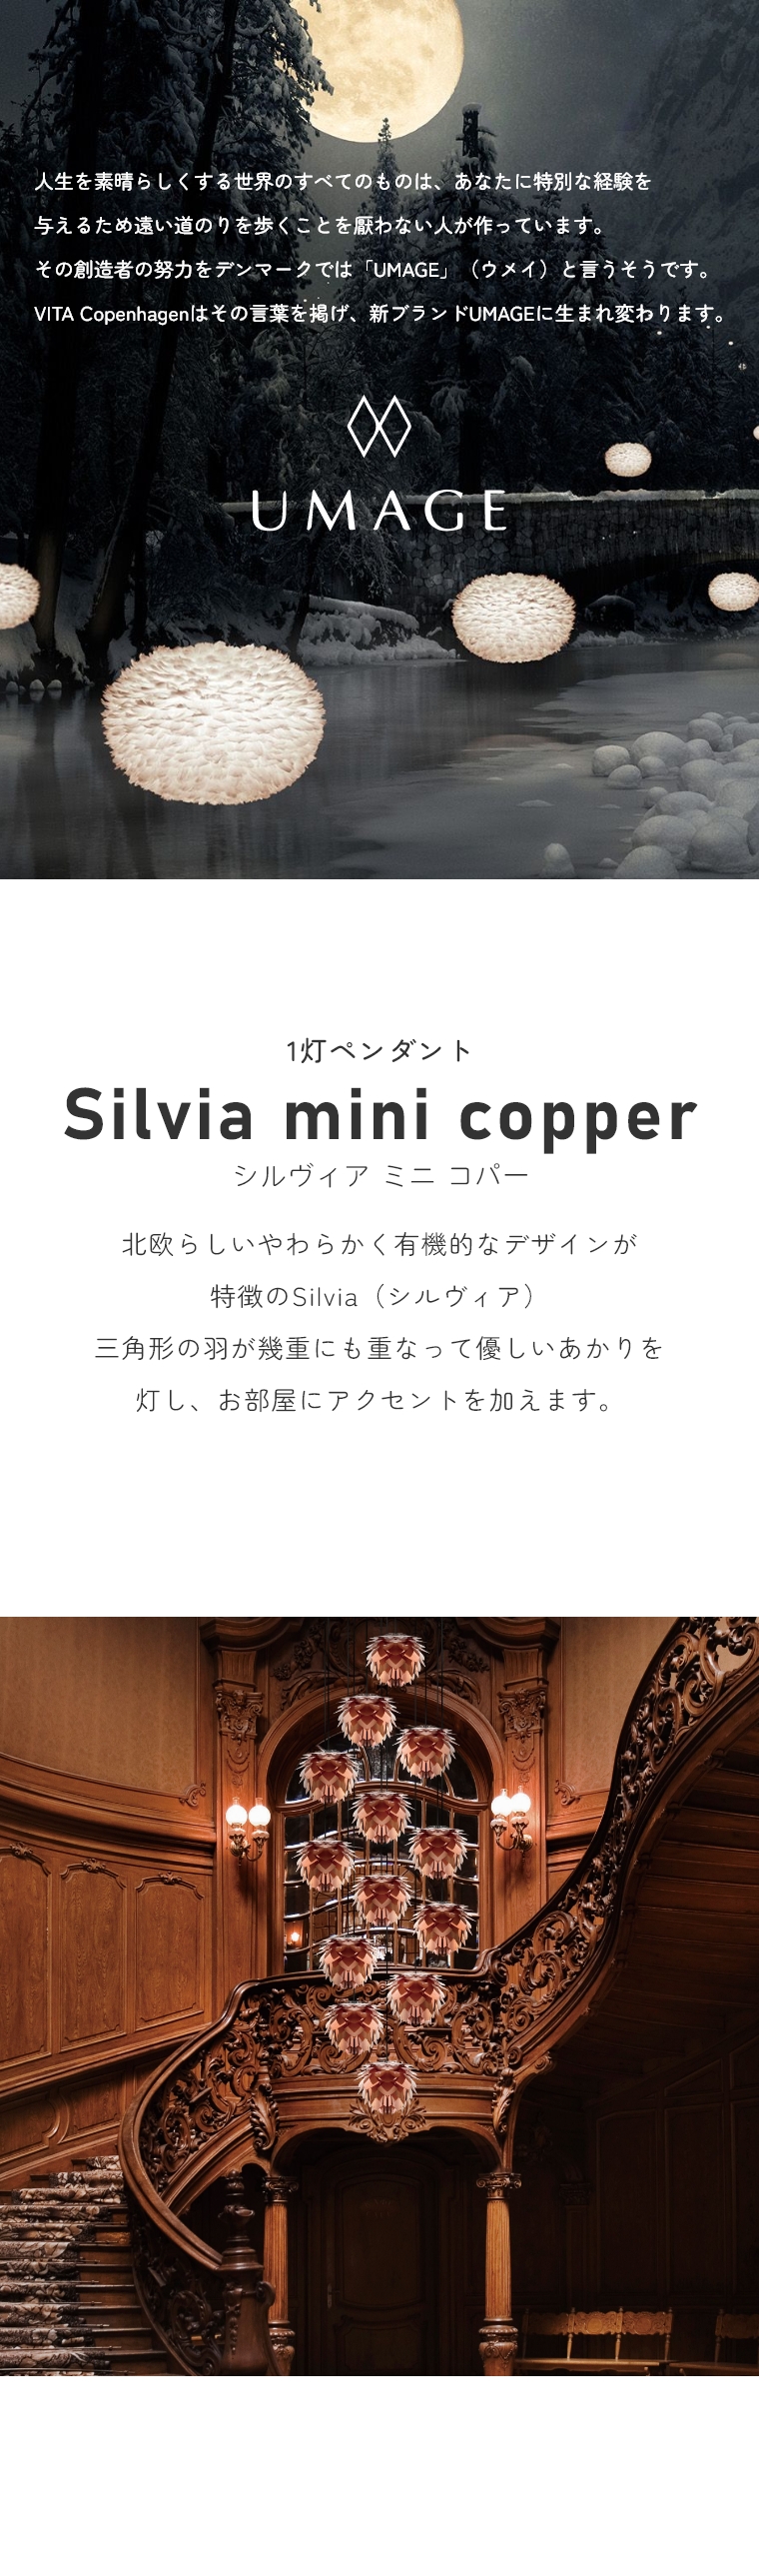 keCXg̃VvȃCg UMAGE(EC) Silvia mini copper (VBA ~j Rp[) 1y_gCg 2030 GbNX